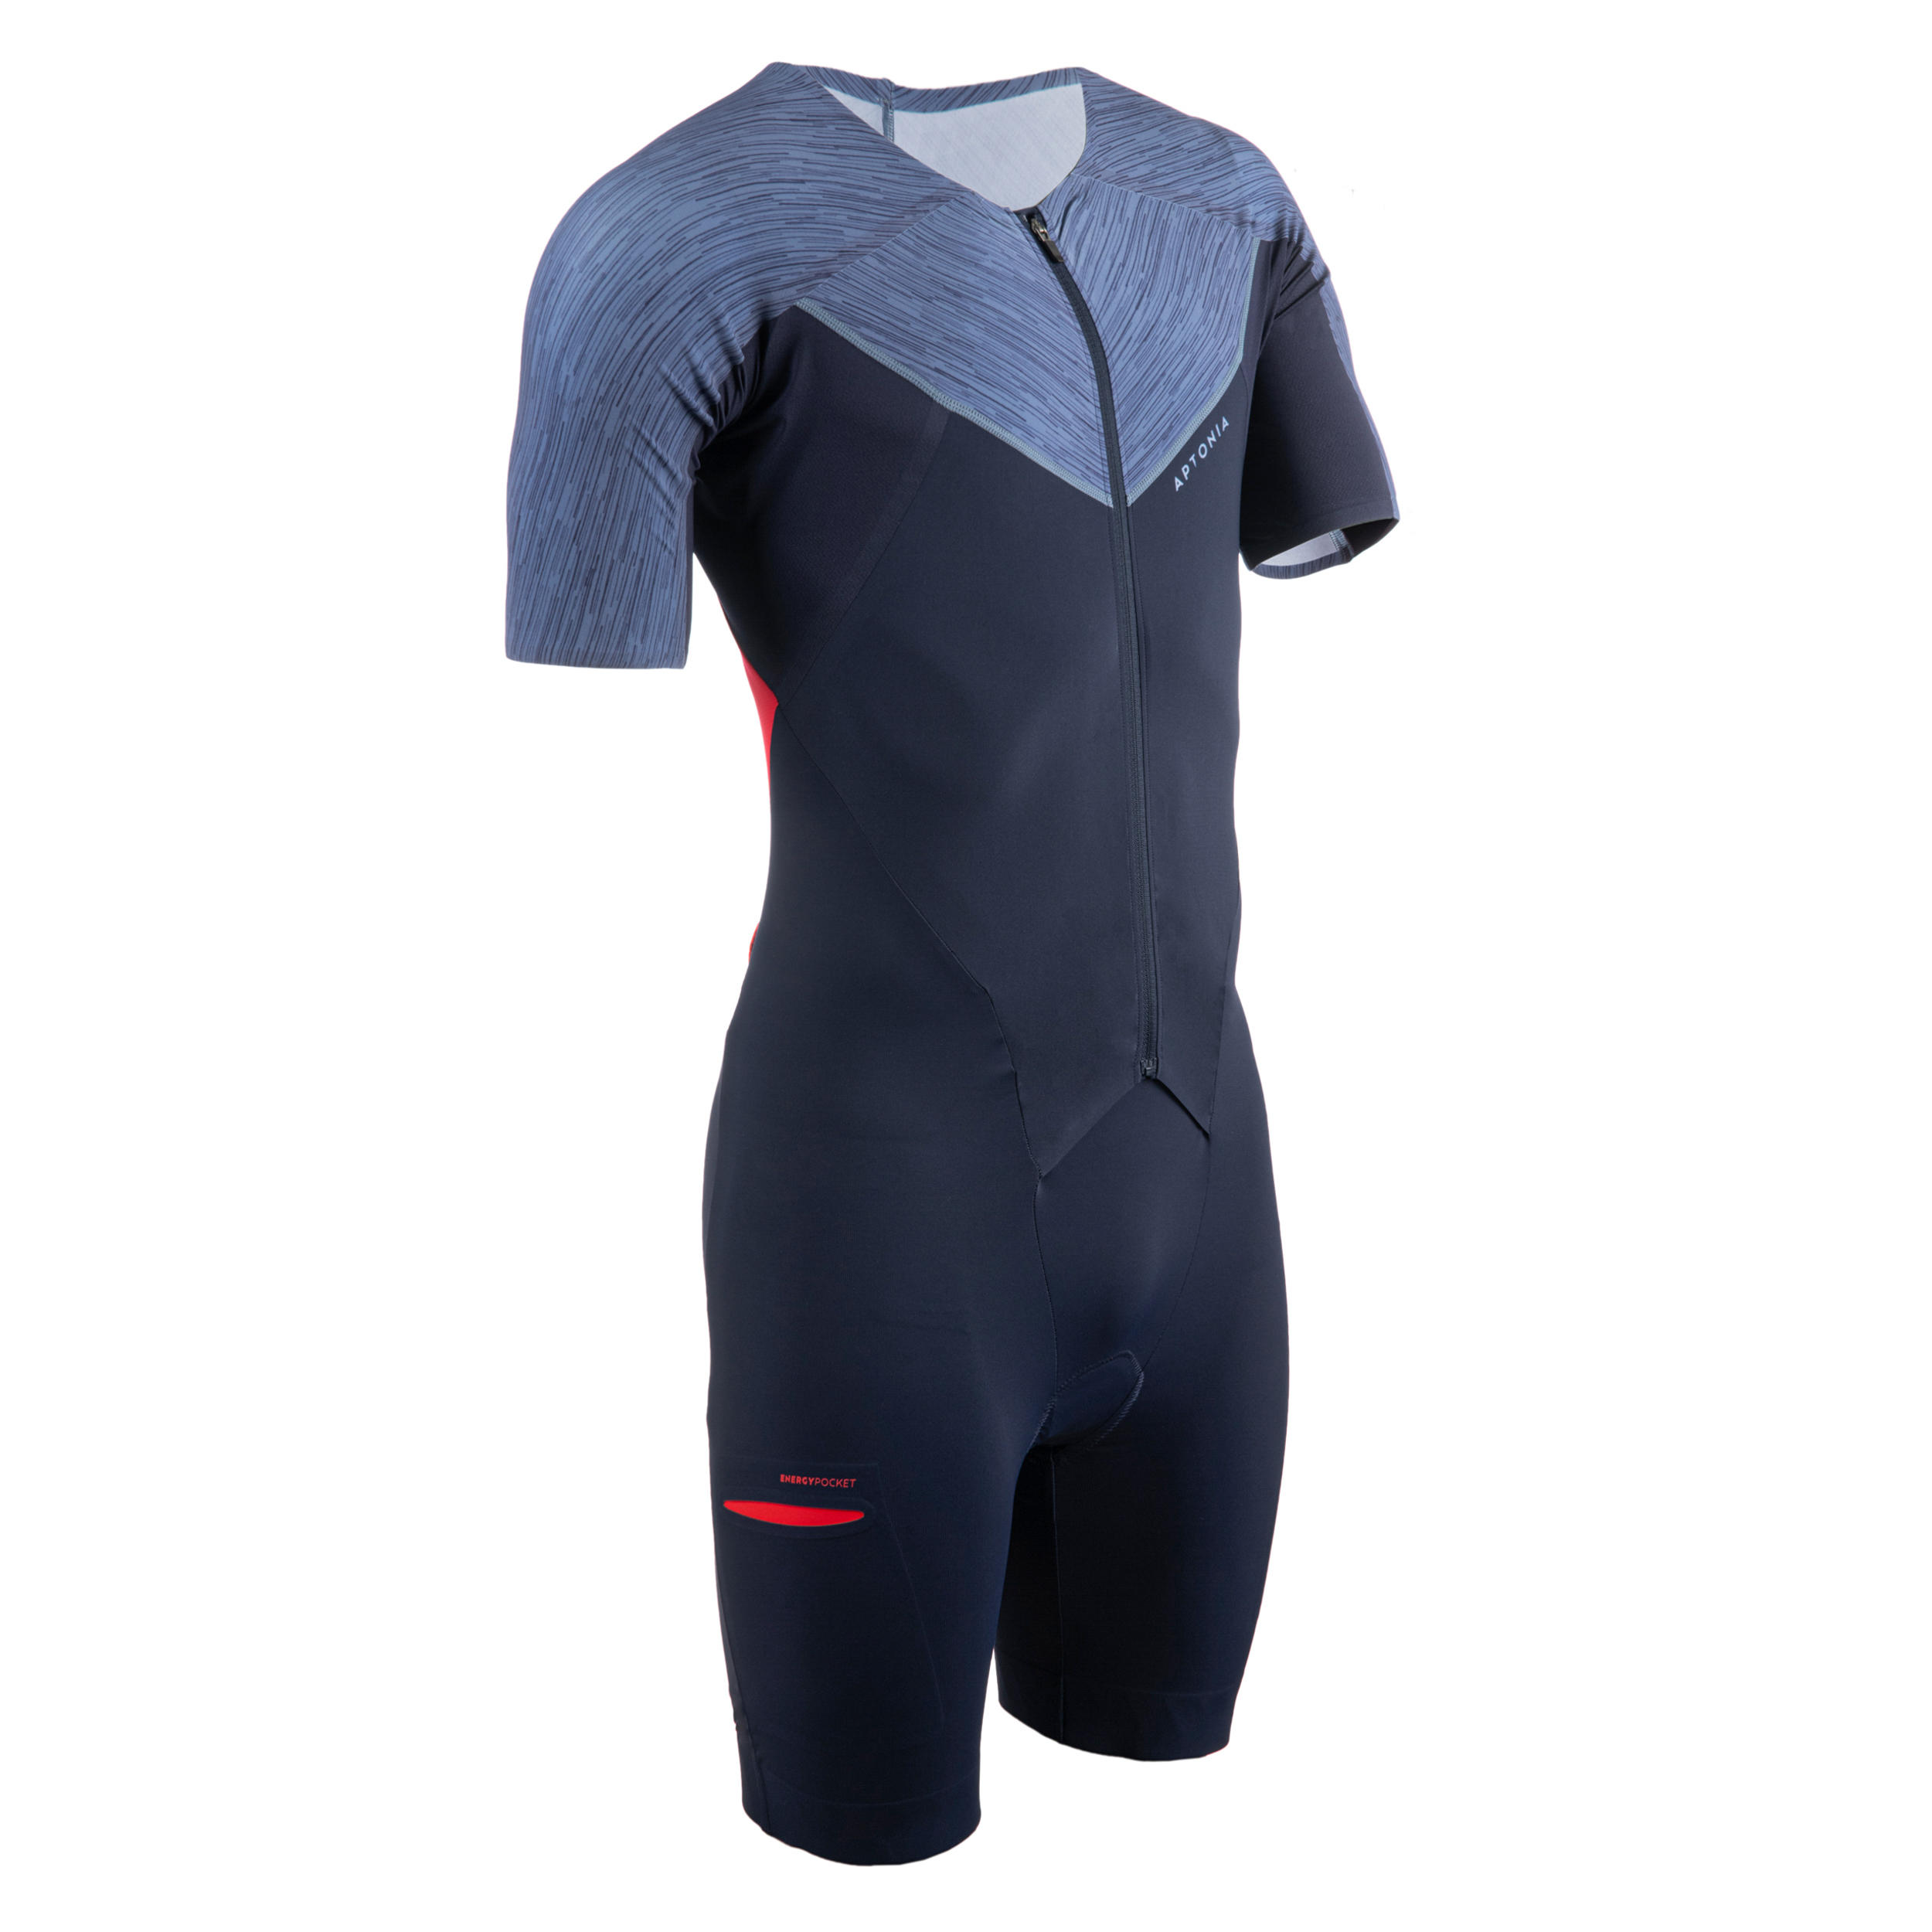 VAN RYSEL Men's Triathlon LD Trisuit - Navy Blue